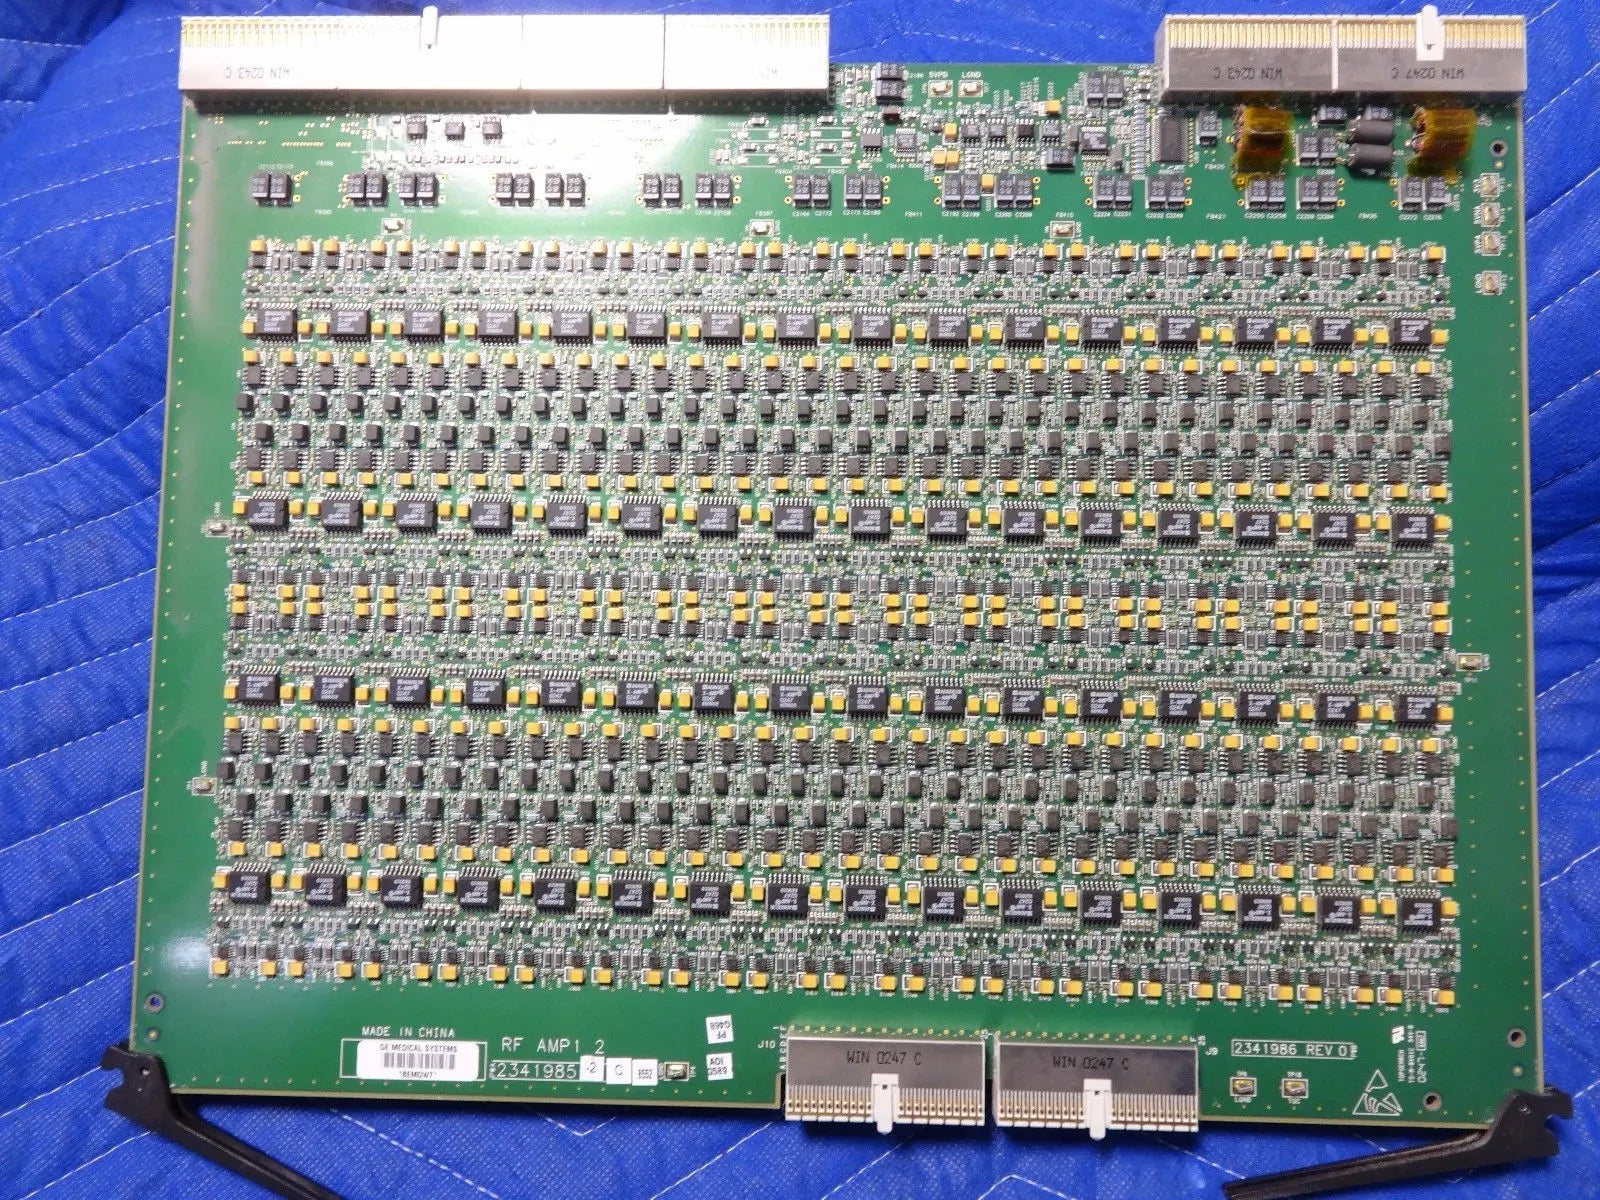 RF AMP1_2 Radio Frequency Amplifier Board 2341985-2 C for GELogiq 9 Ultrasound